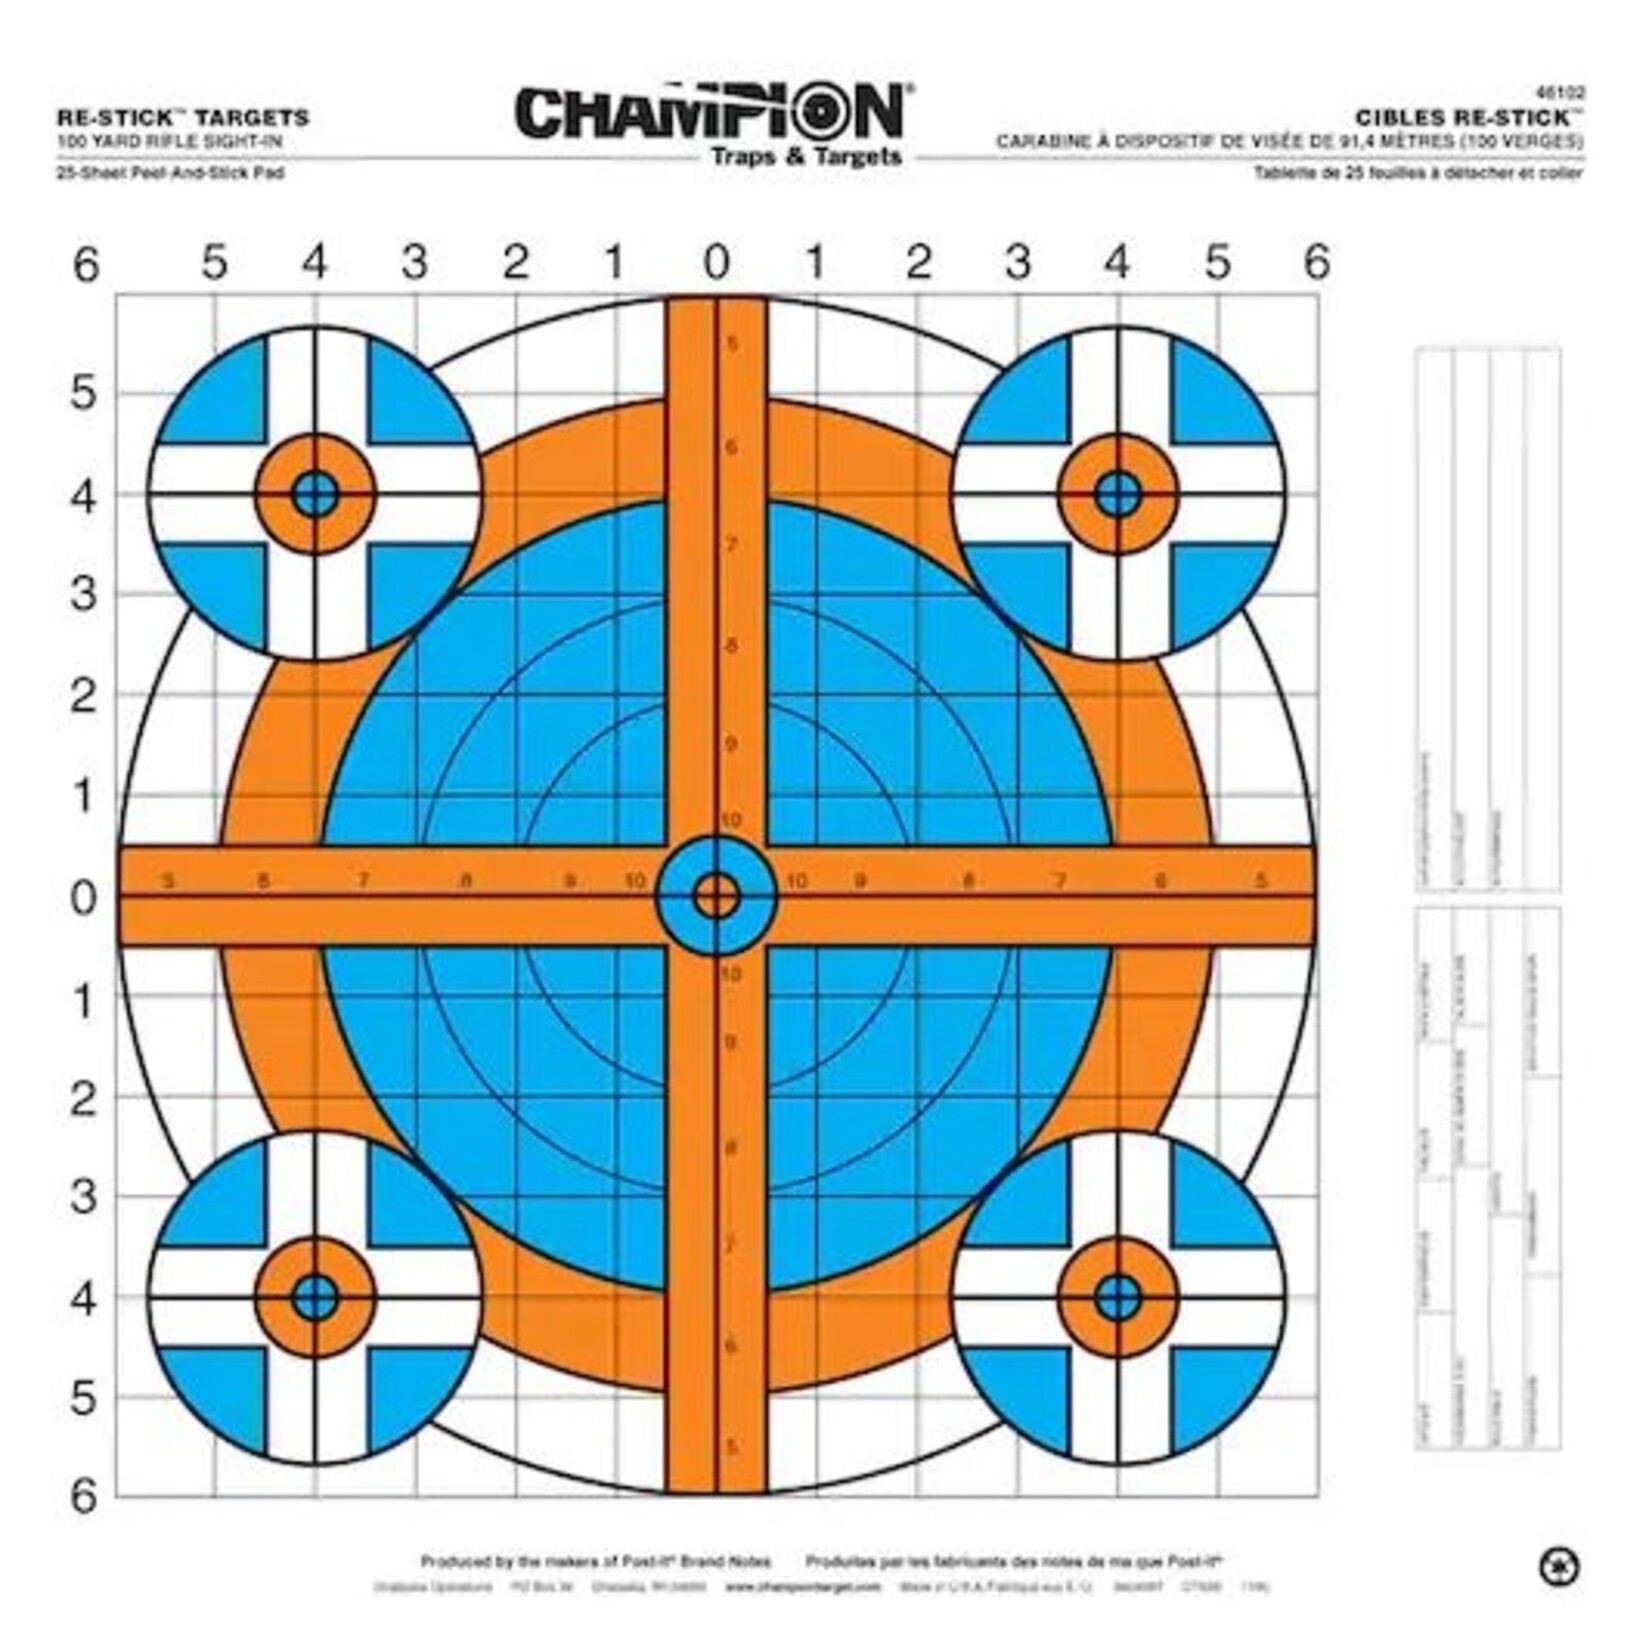 Champion Champion Re-Stick 100yd Rifle Sight-In Target 16x16 25pk